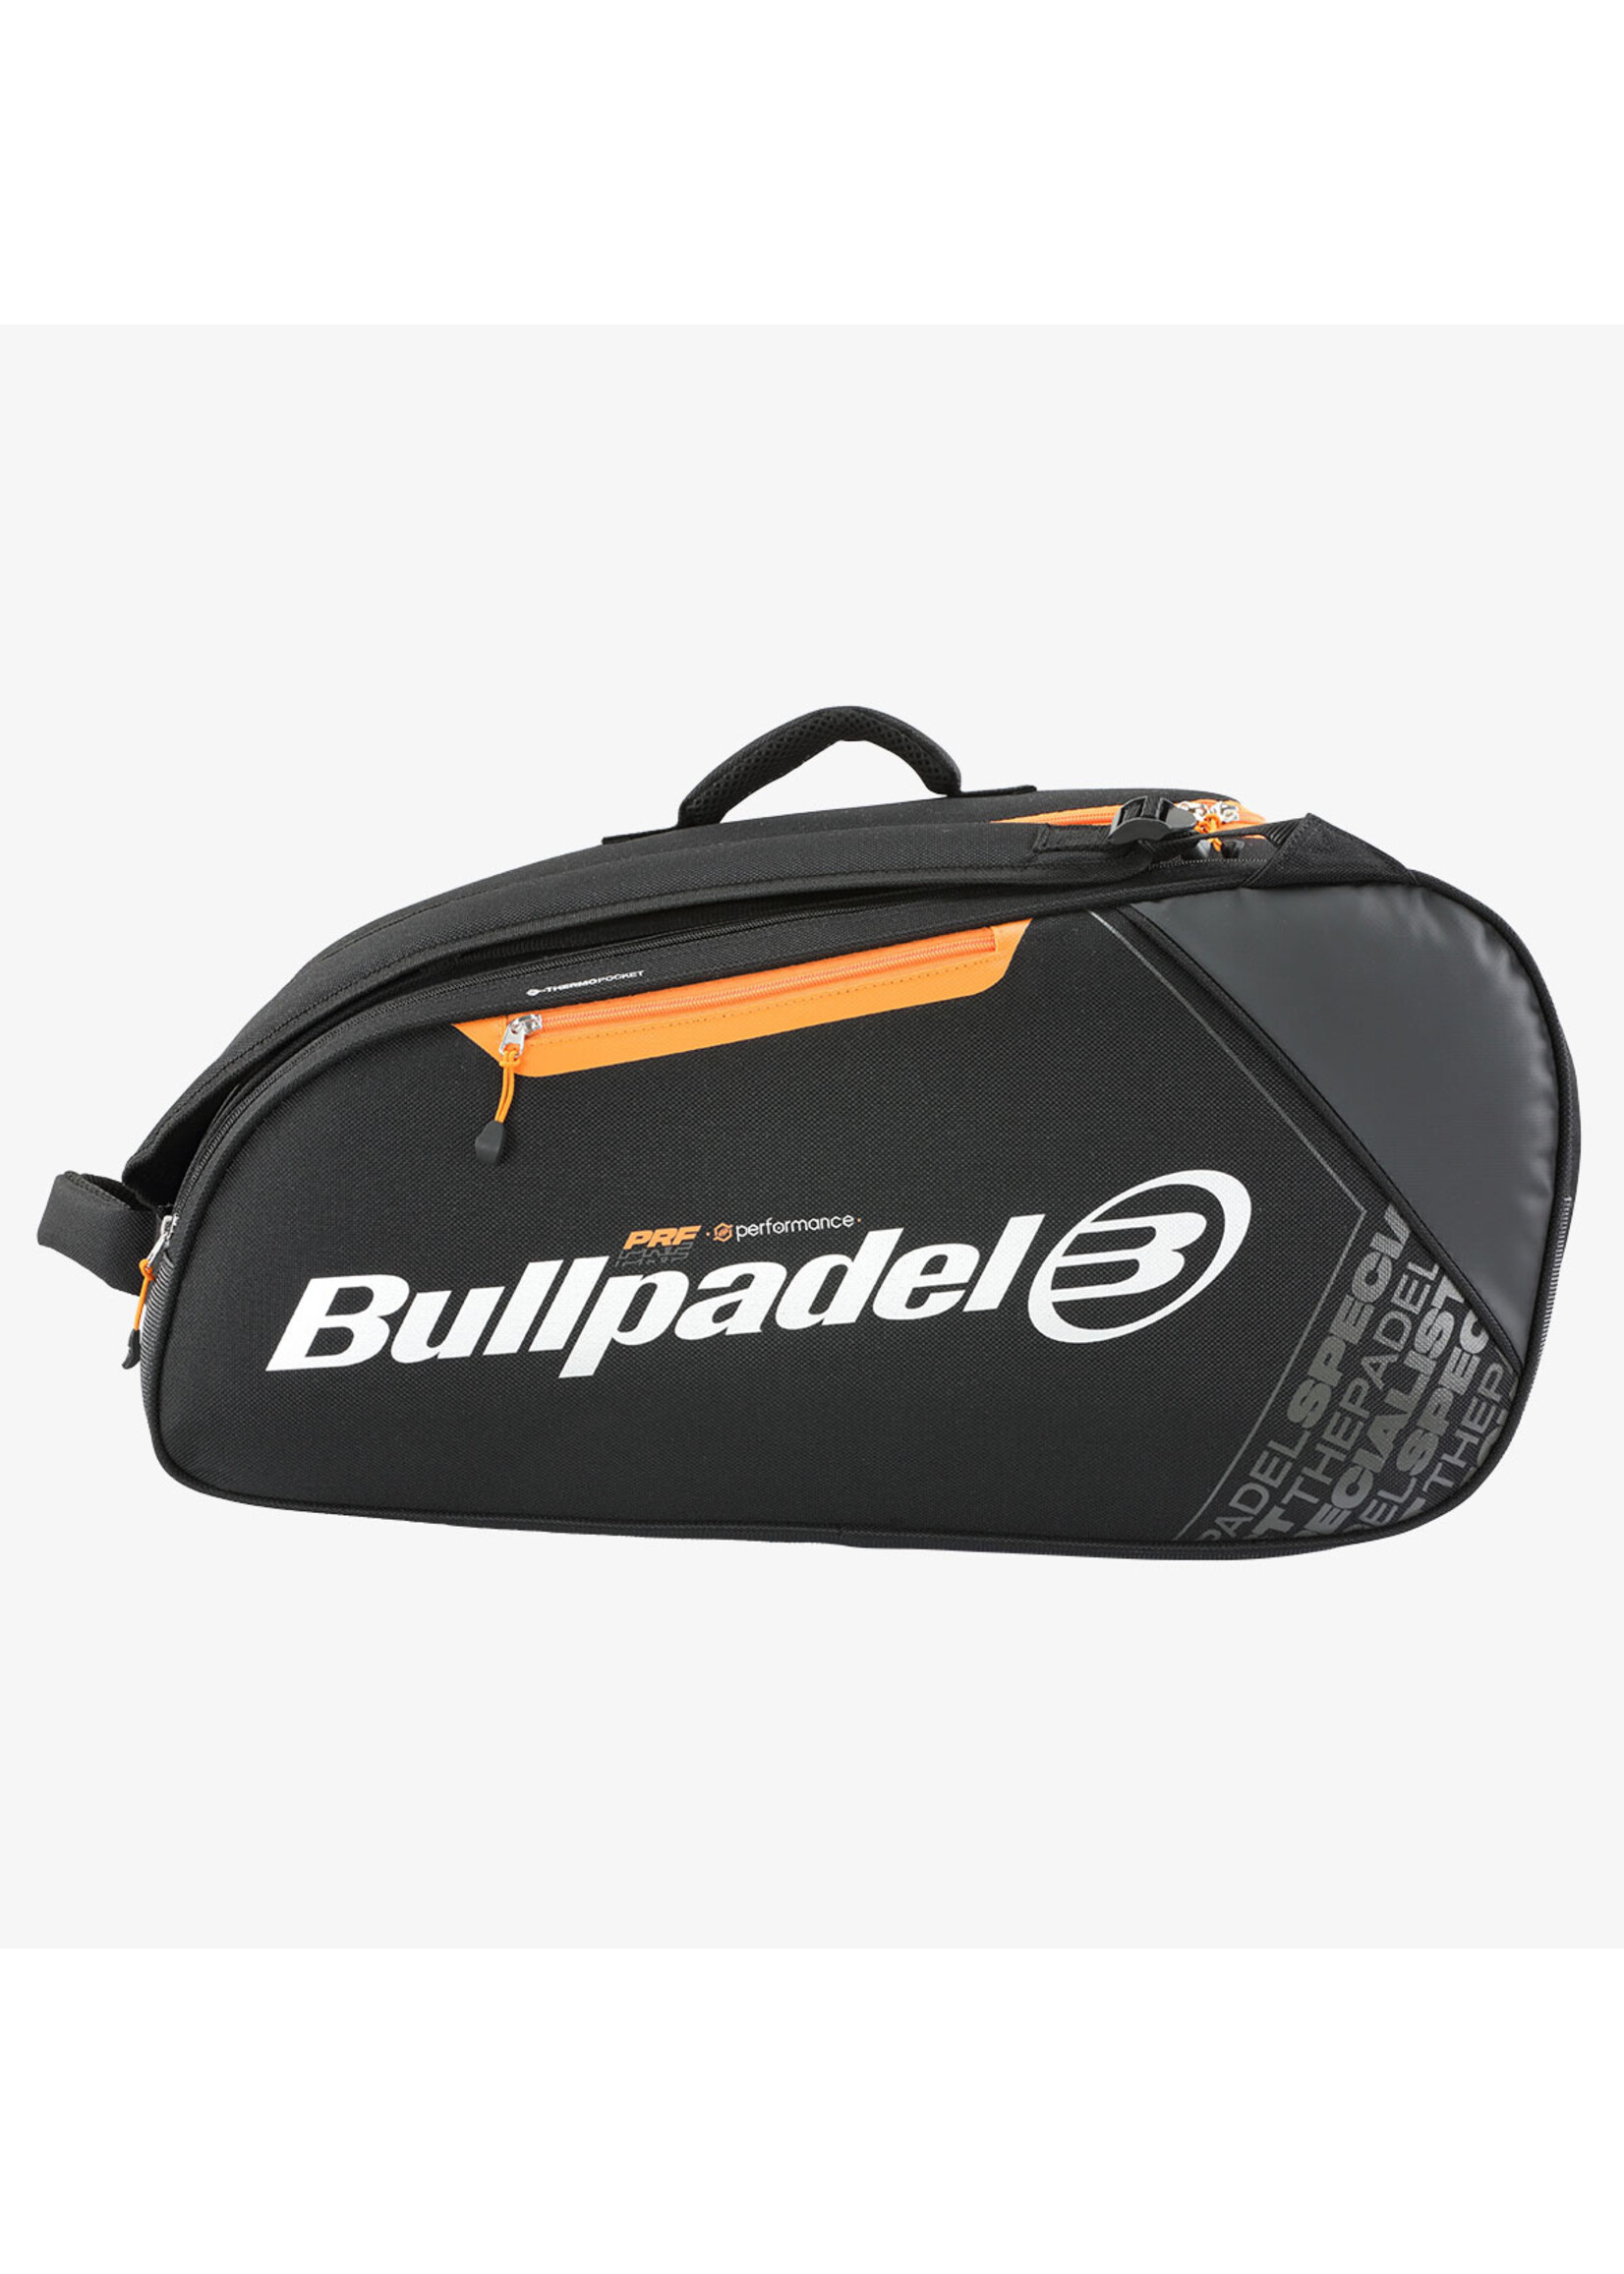 Bullpadel BAG BULLPADEL BPP-24014 PERFORMANCE 005 BLACK